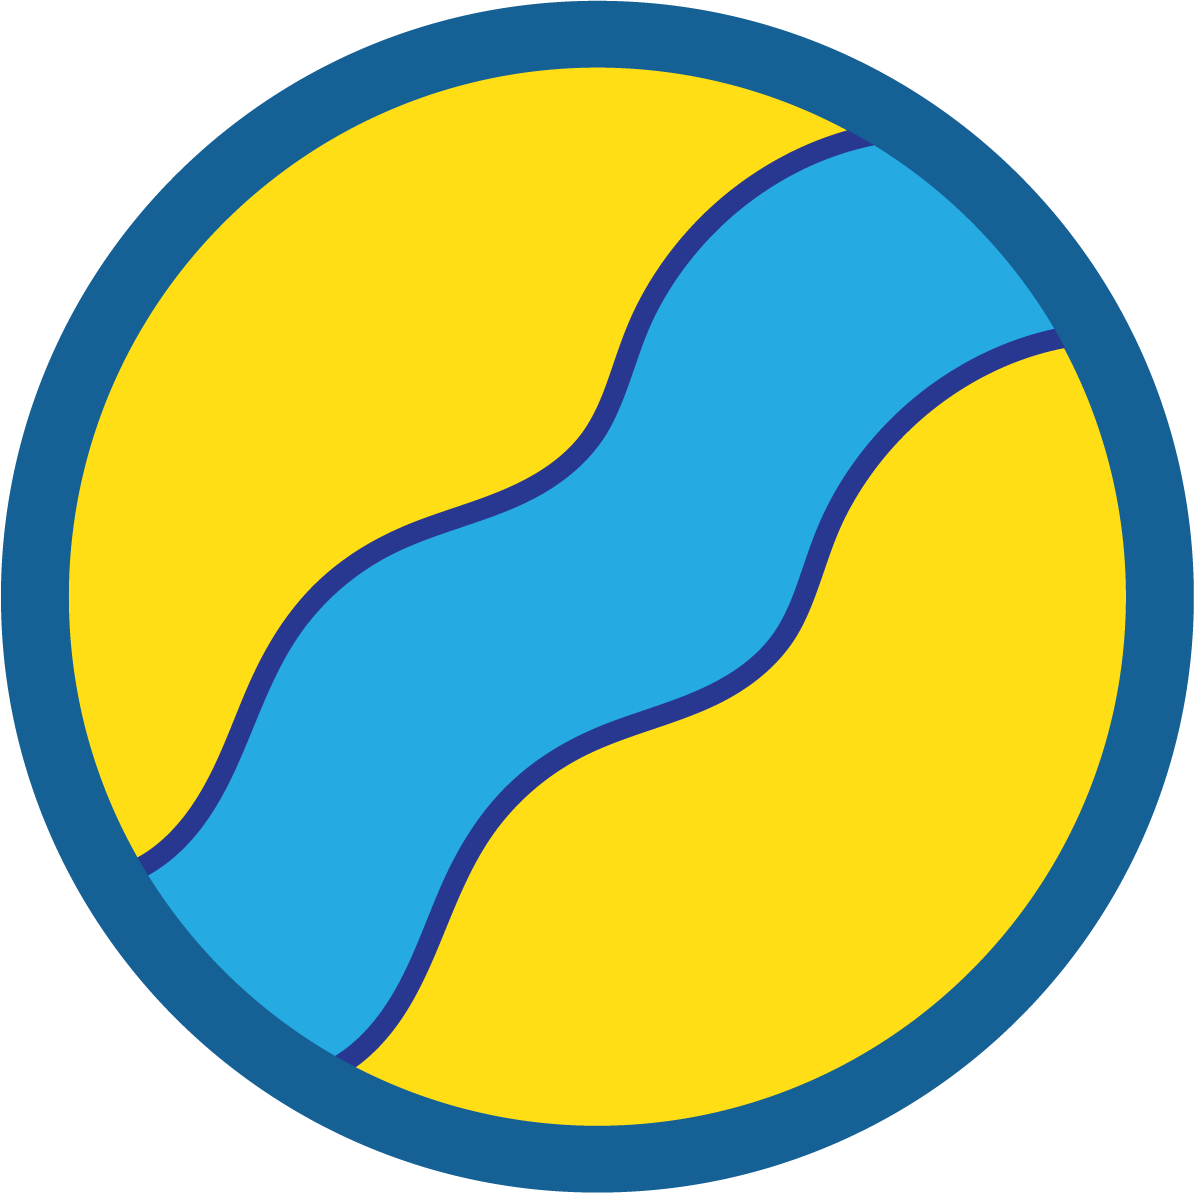 Electrum logo